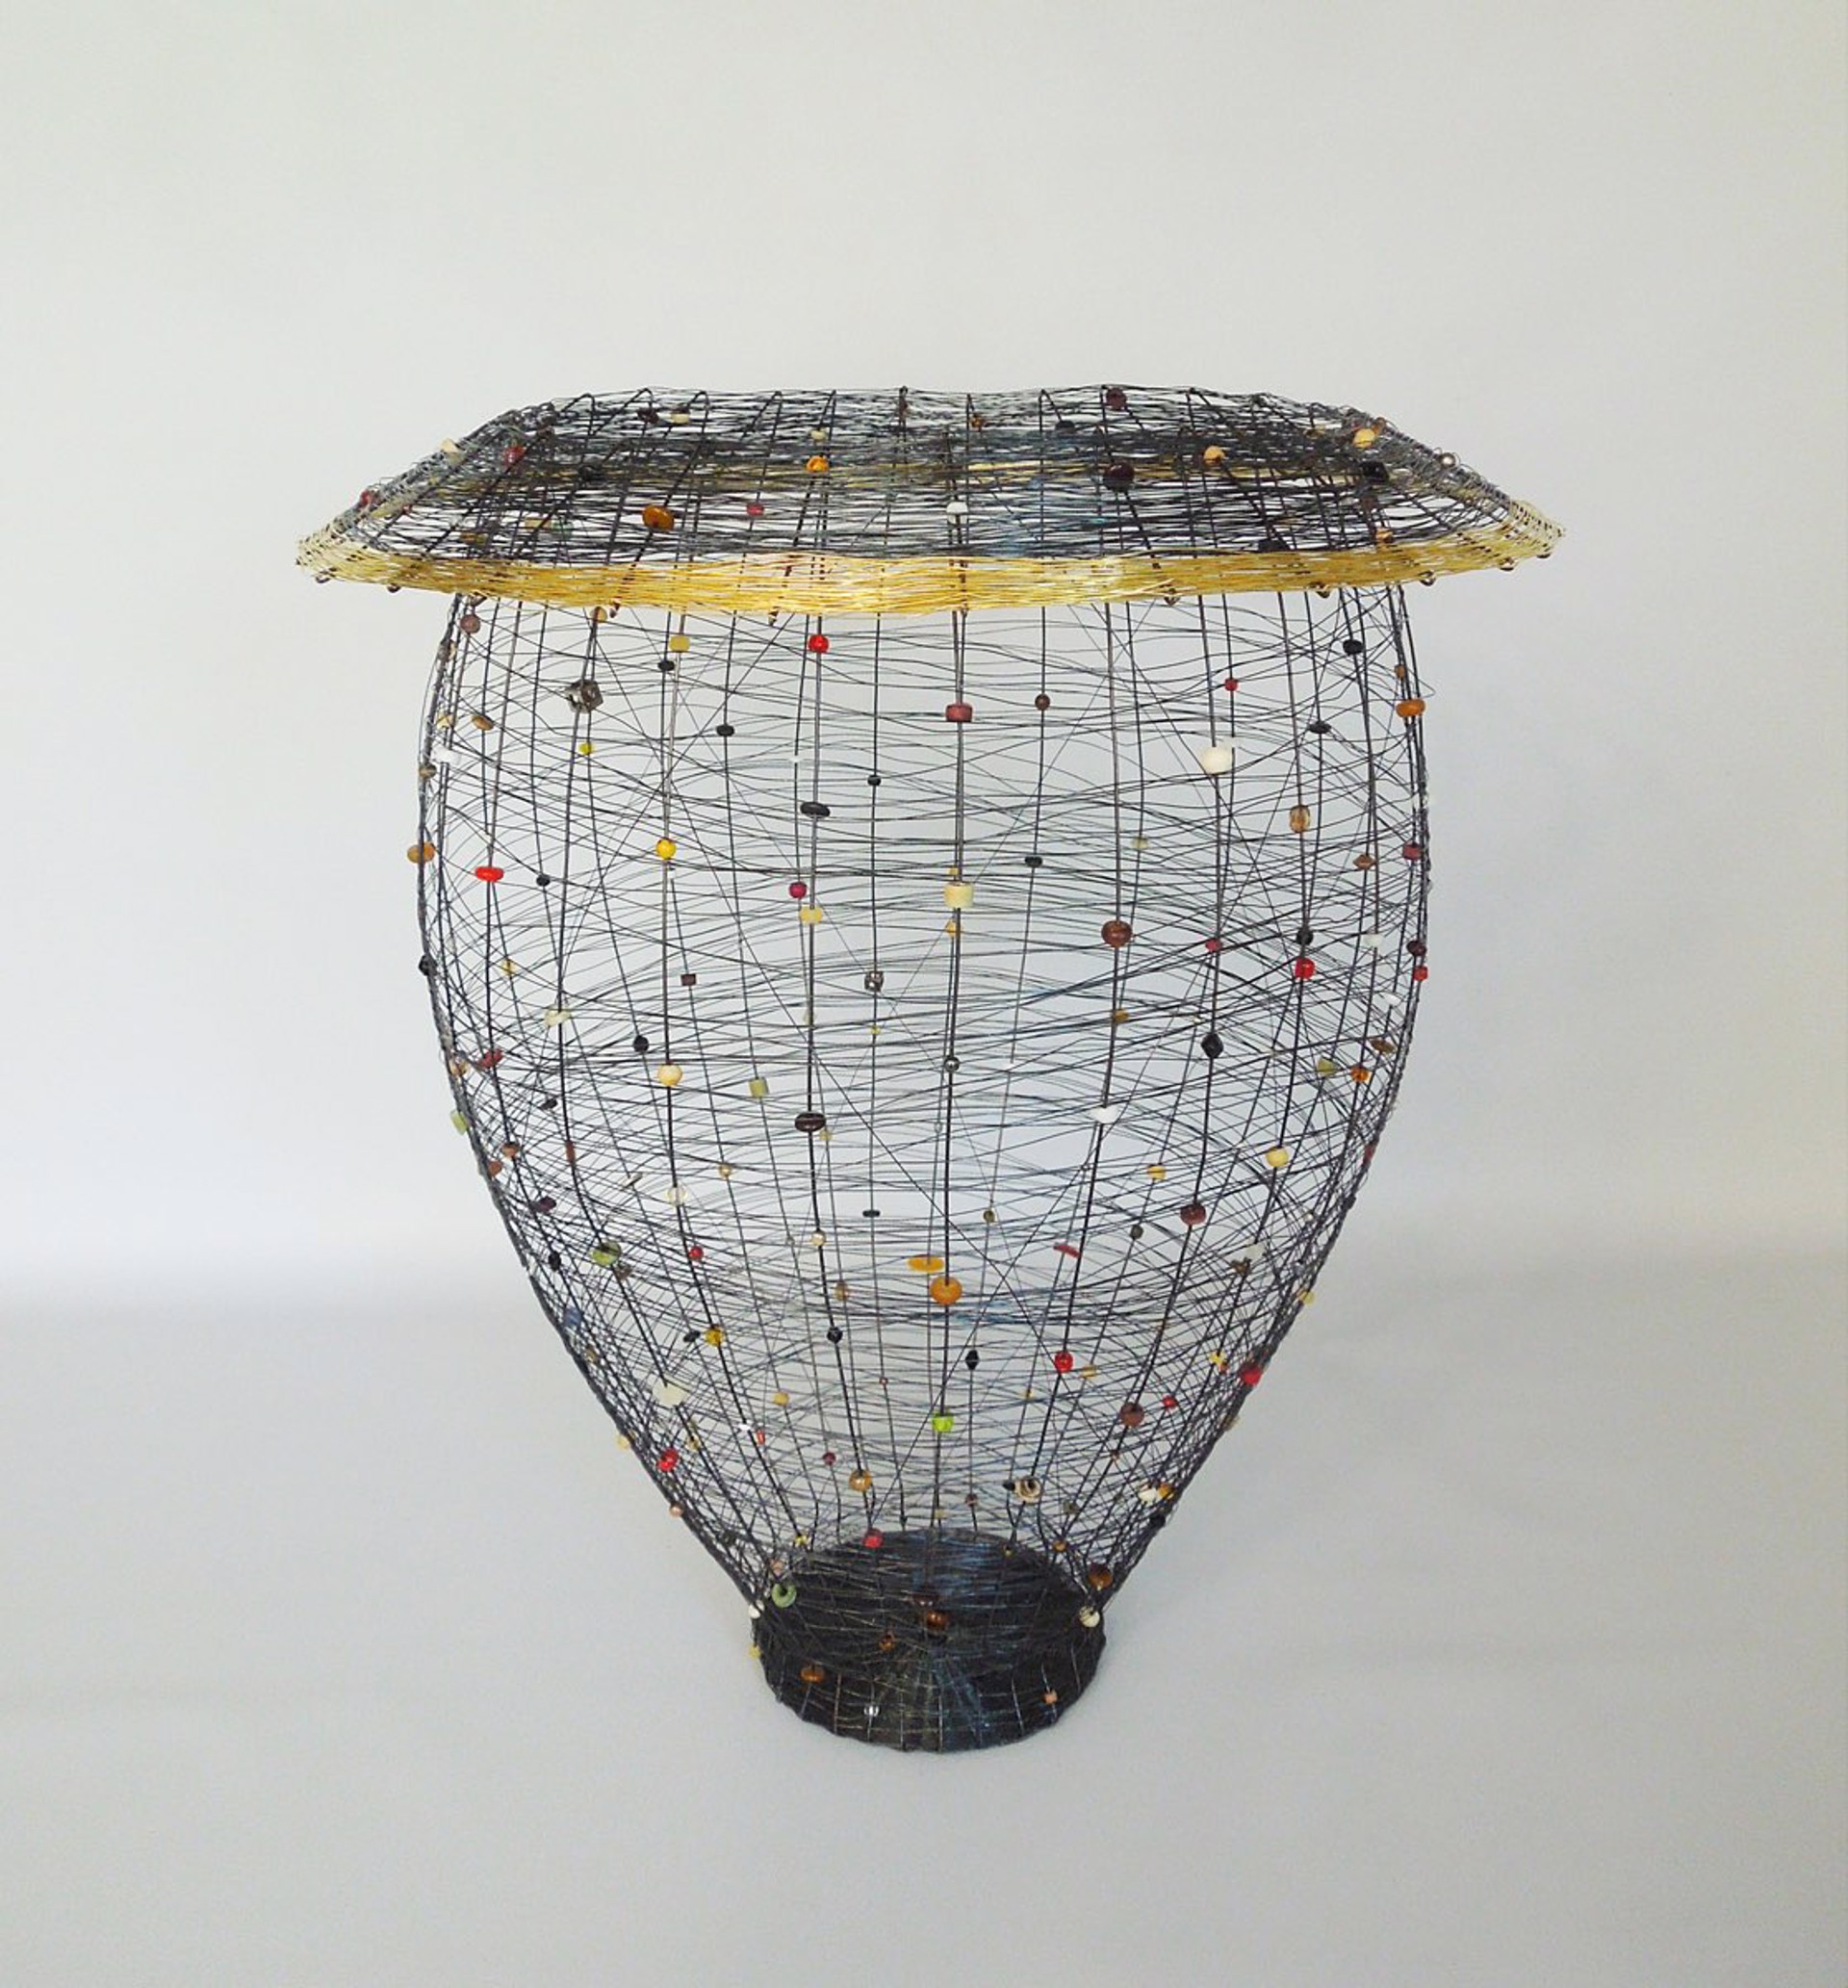 Collar Basket by Sally Prangley